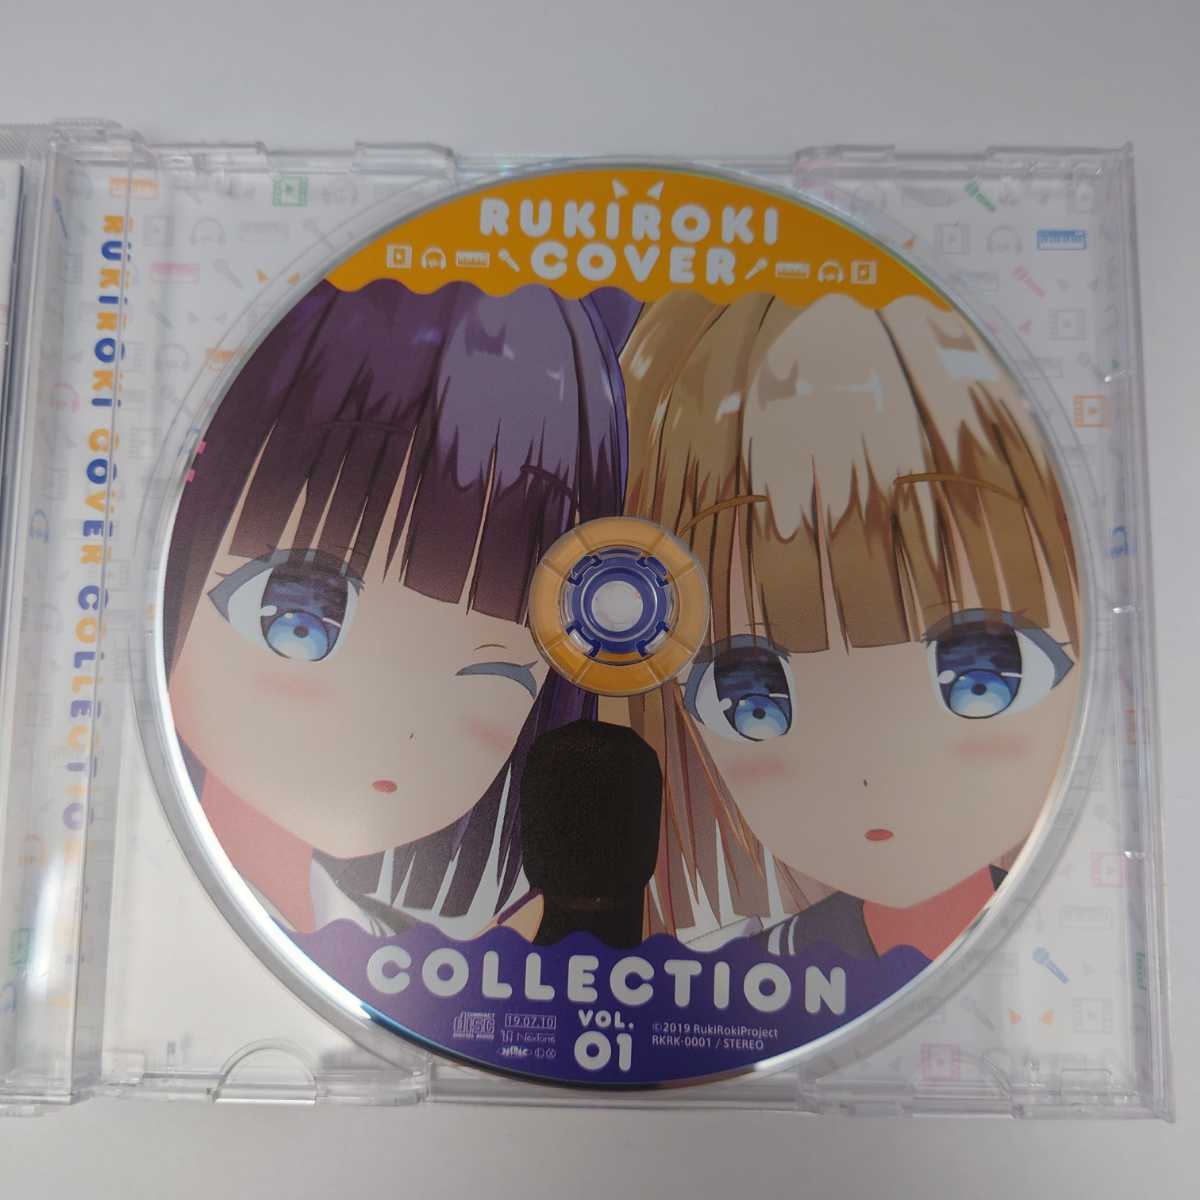 RUKIROKI COVER COLLECTION Vol.01 流石乃ルキロキ bak.unimed.ac.id